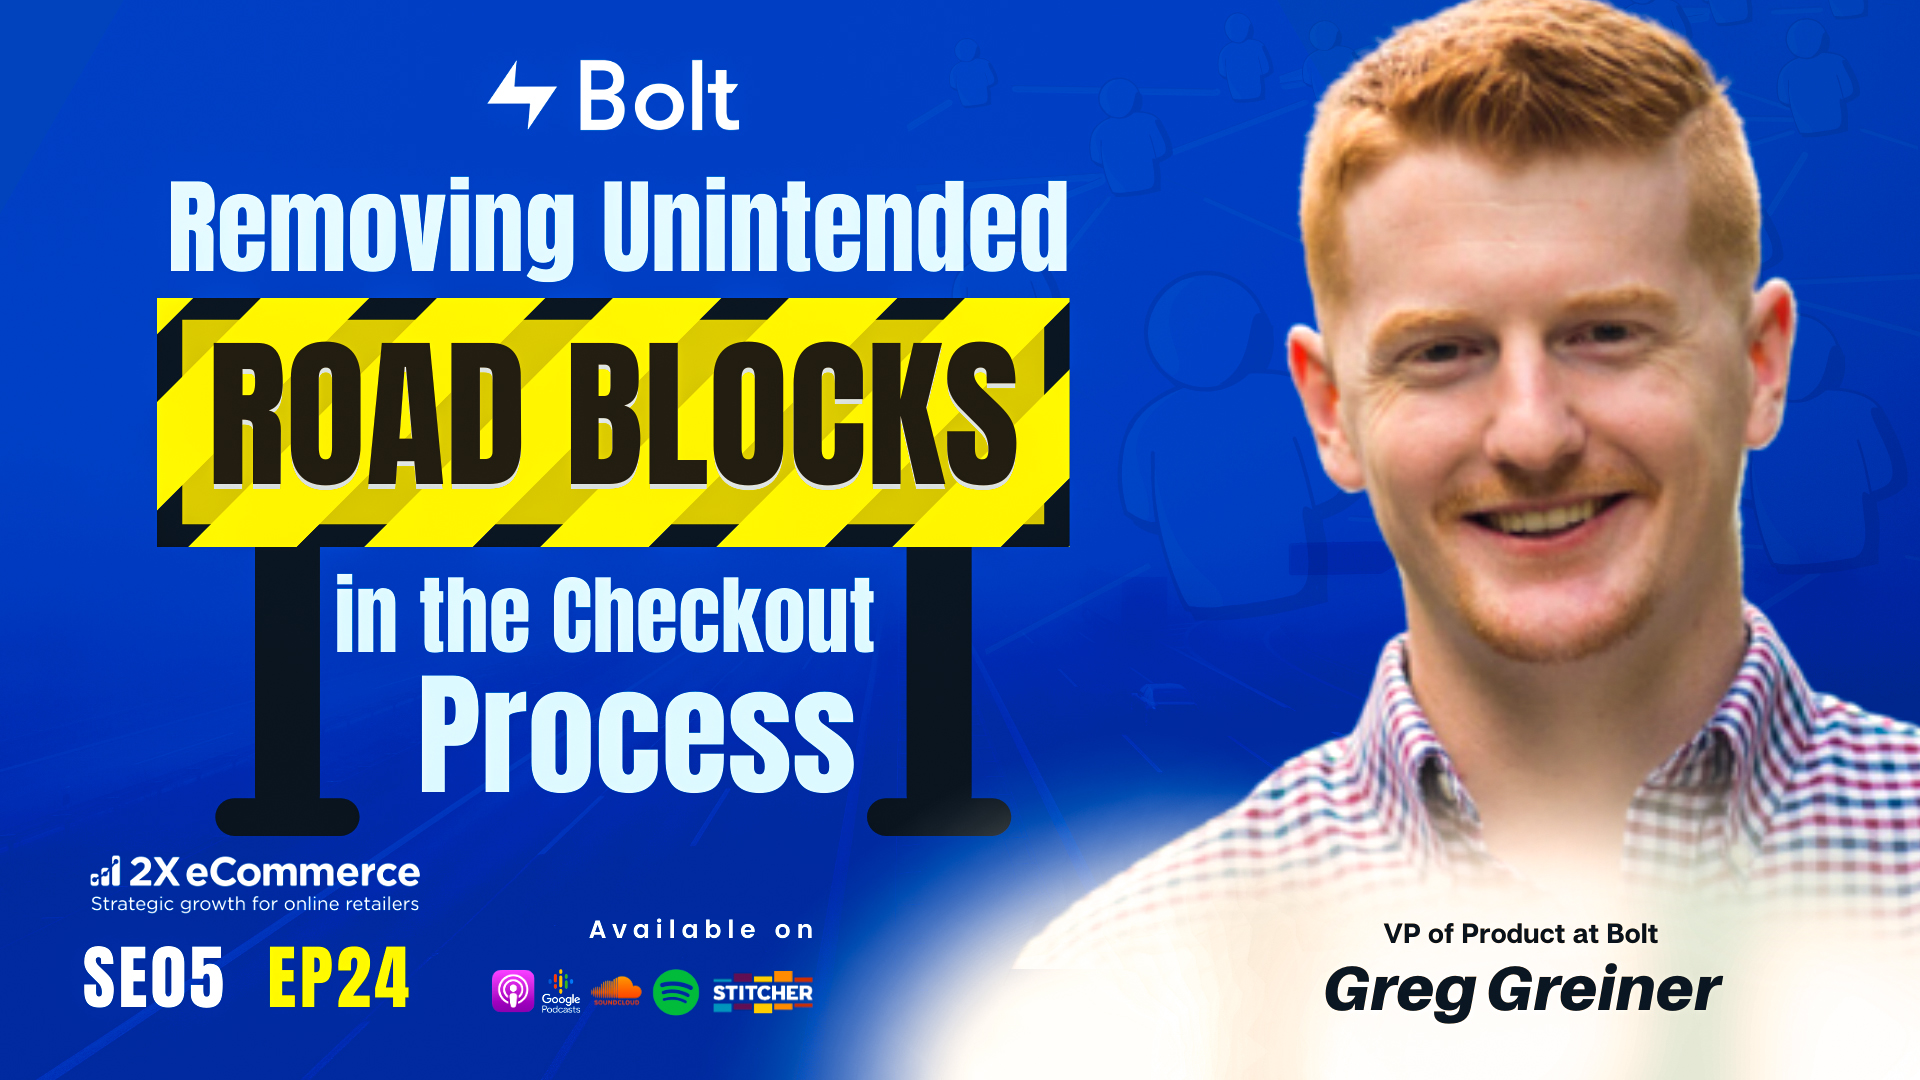 Greg's Blocks